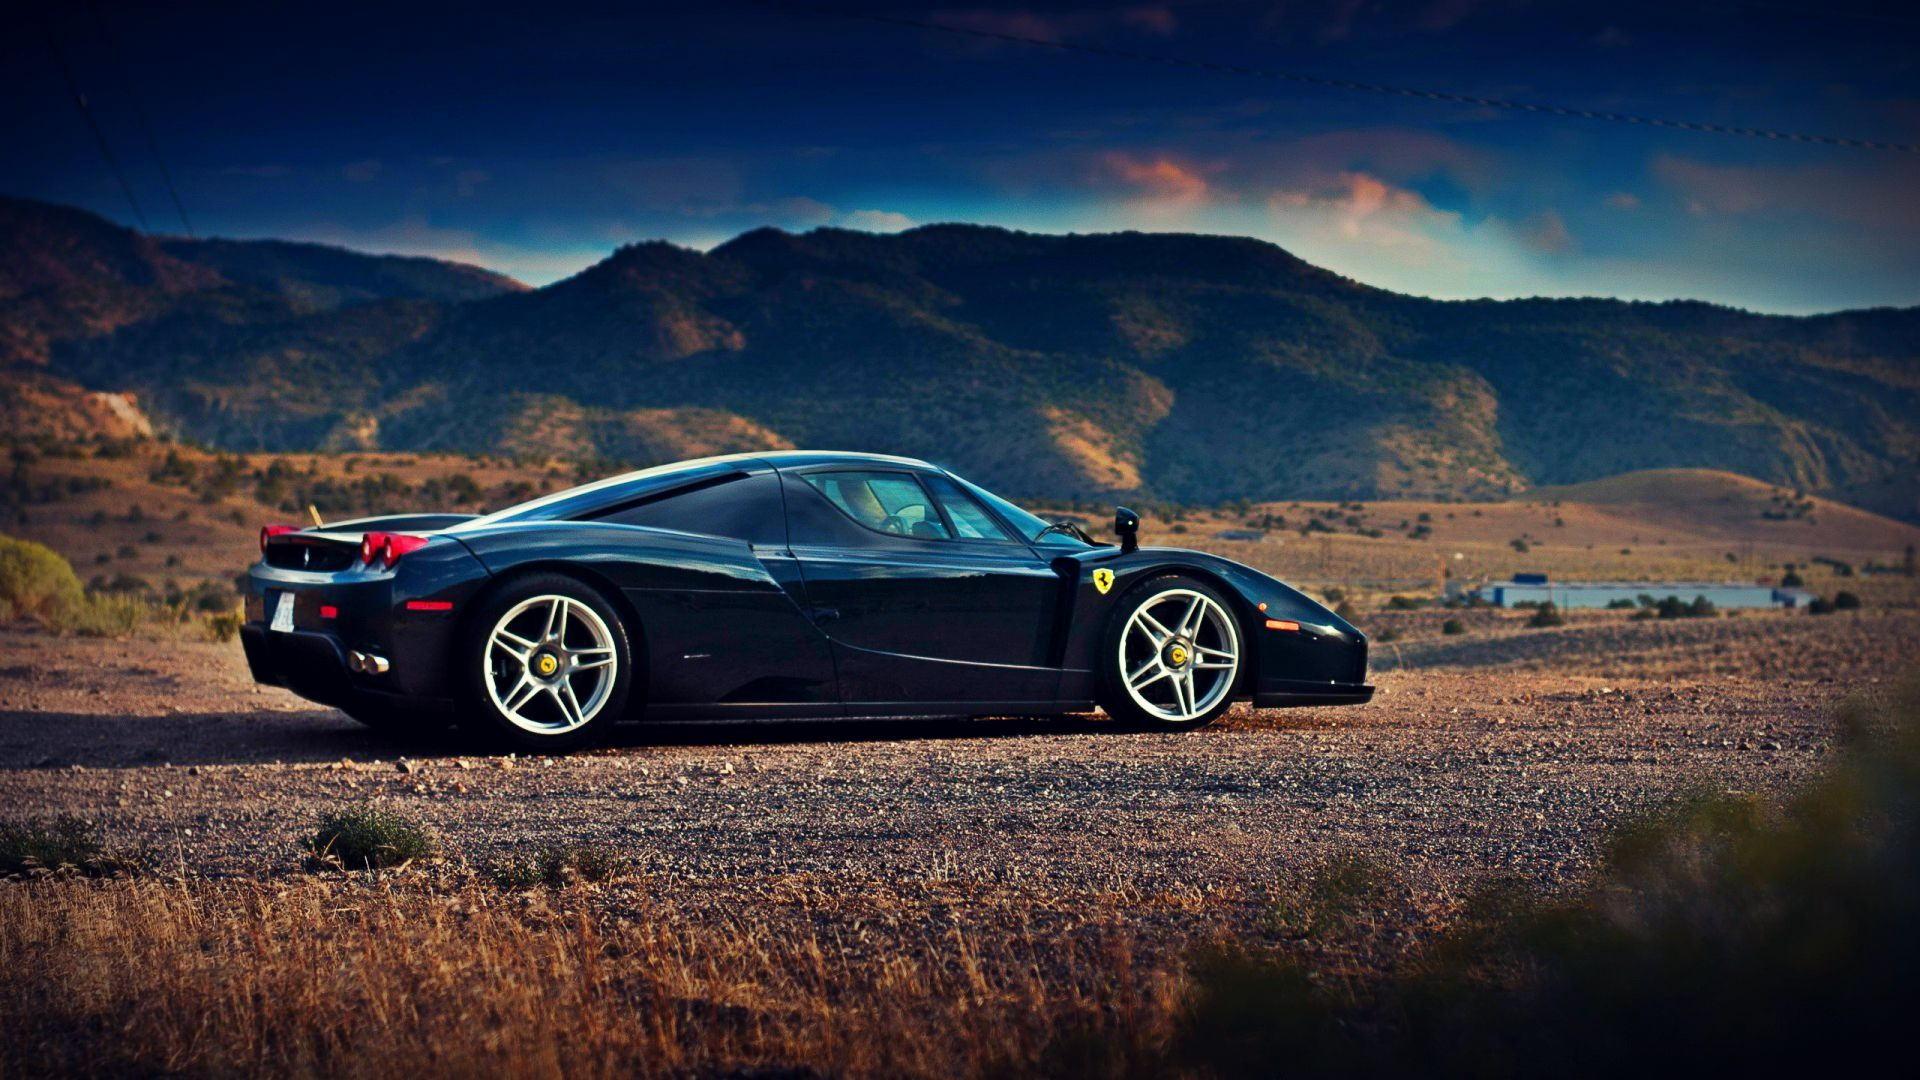 Blue Ferrari Enzo Wallpapers - Top Free Blue Ferrari Enzo ...